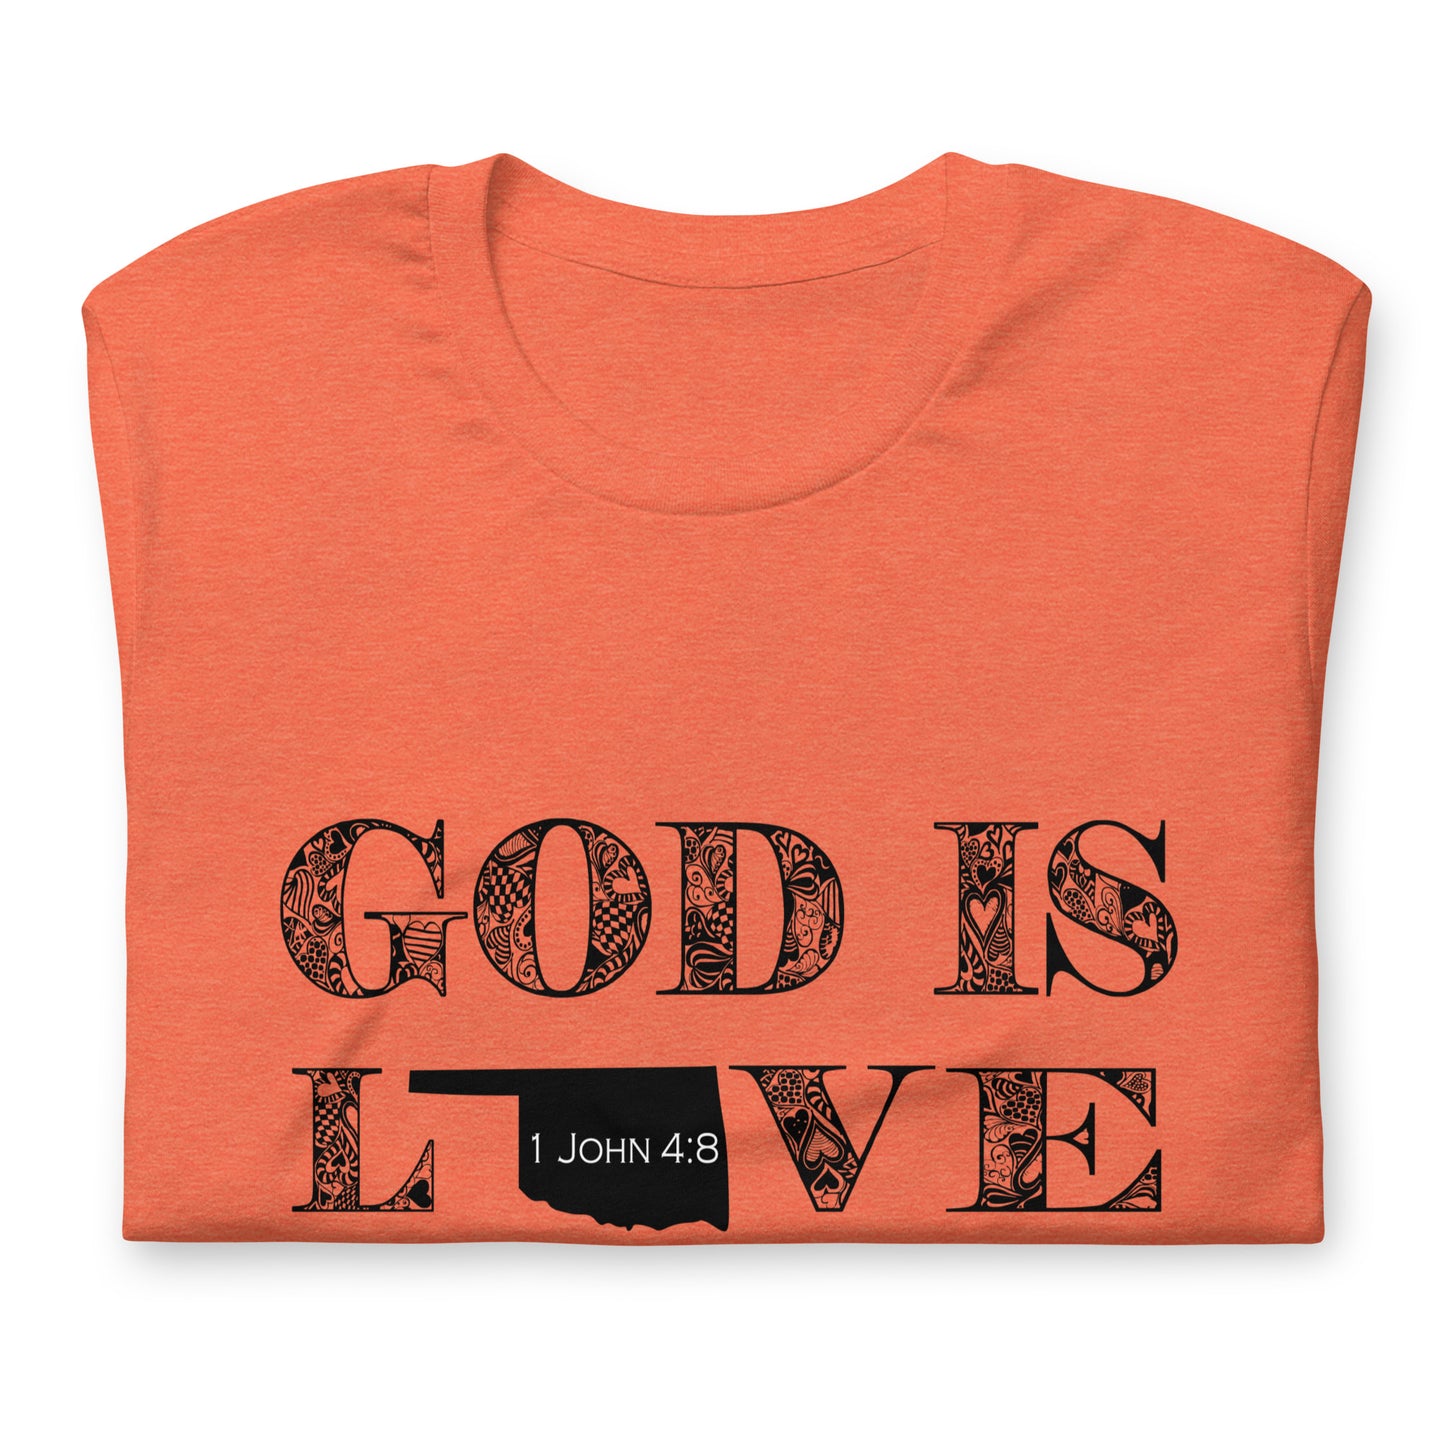 1 John 4:8 God is Love Unisex Oklahoma T-shirt in Heather Orange - front view folded